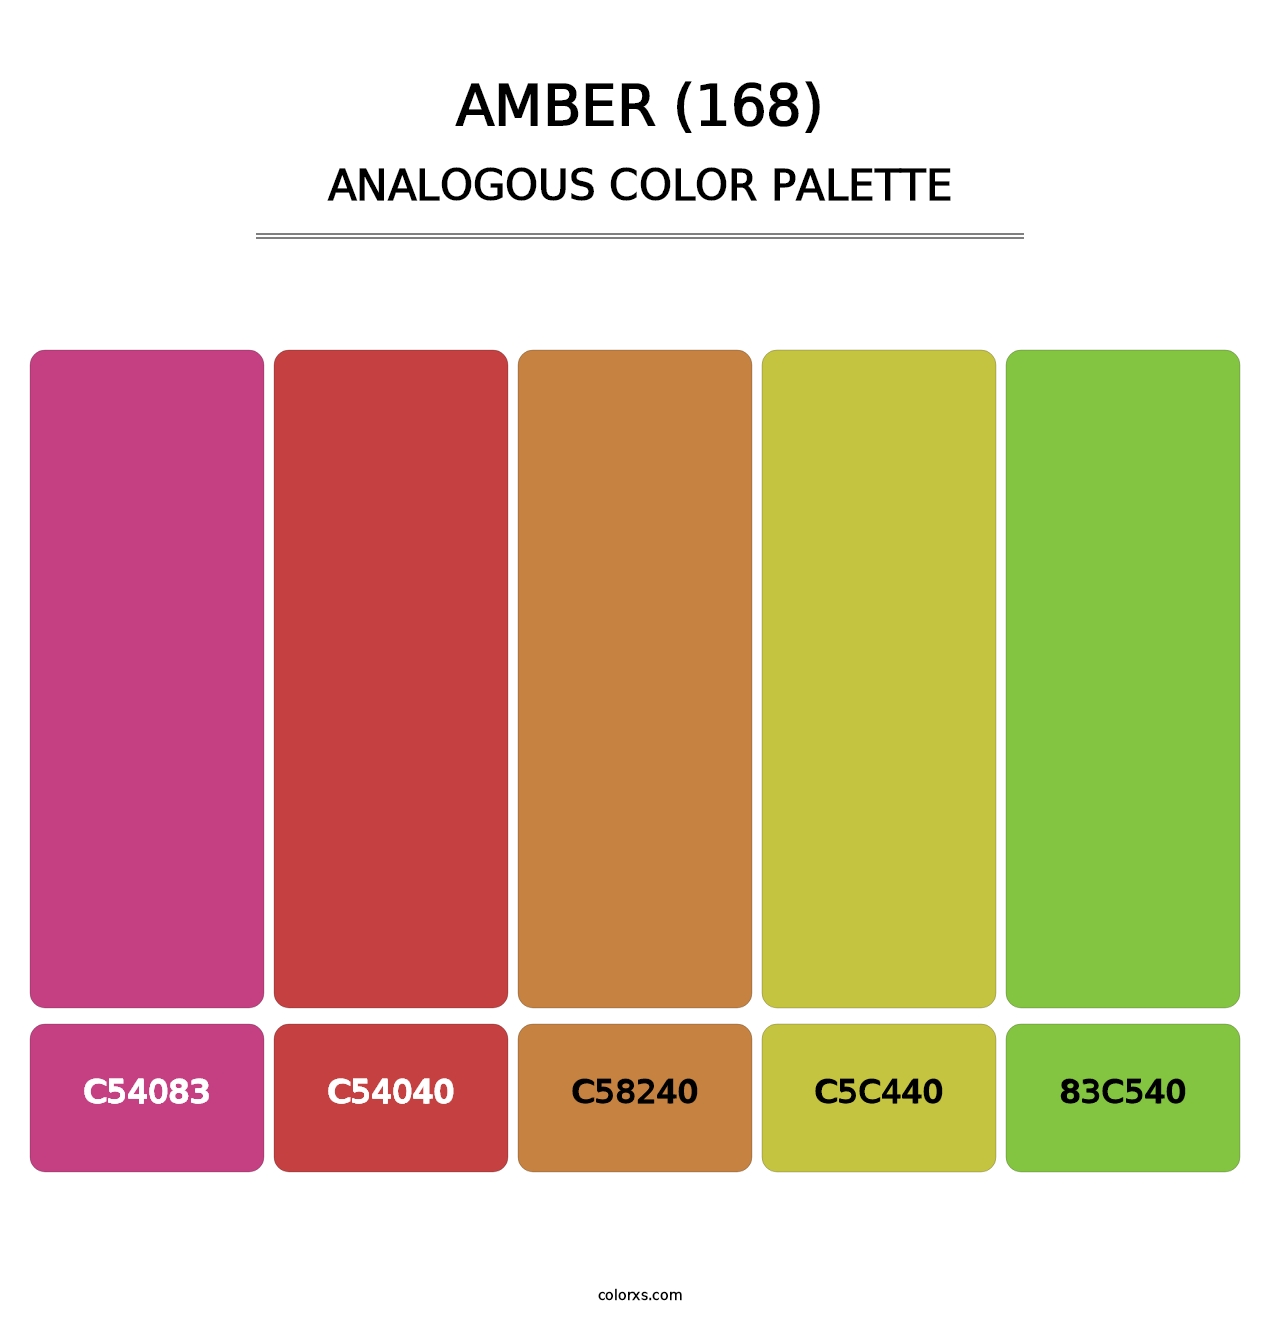 Amber (168) - Analogous Color Palette